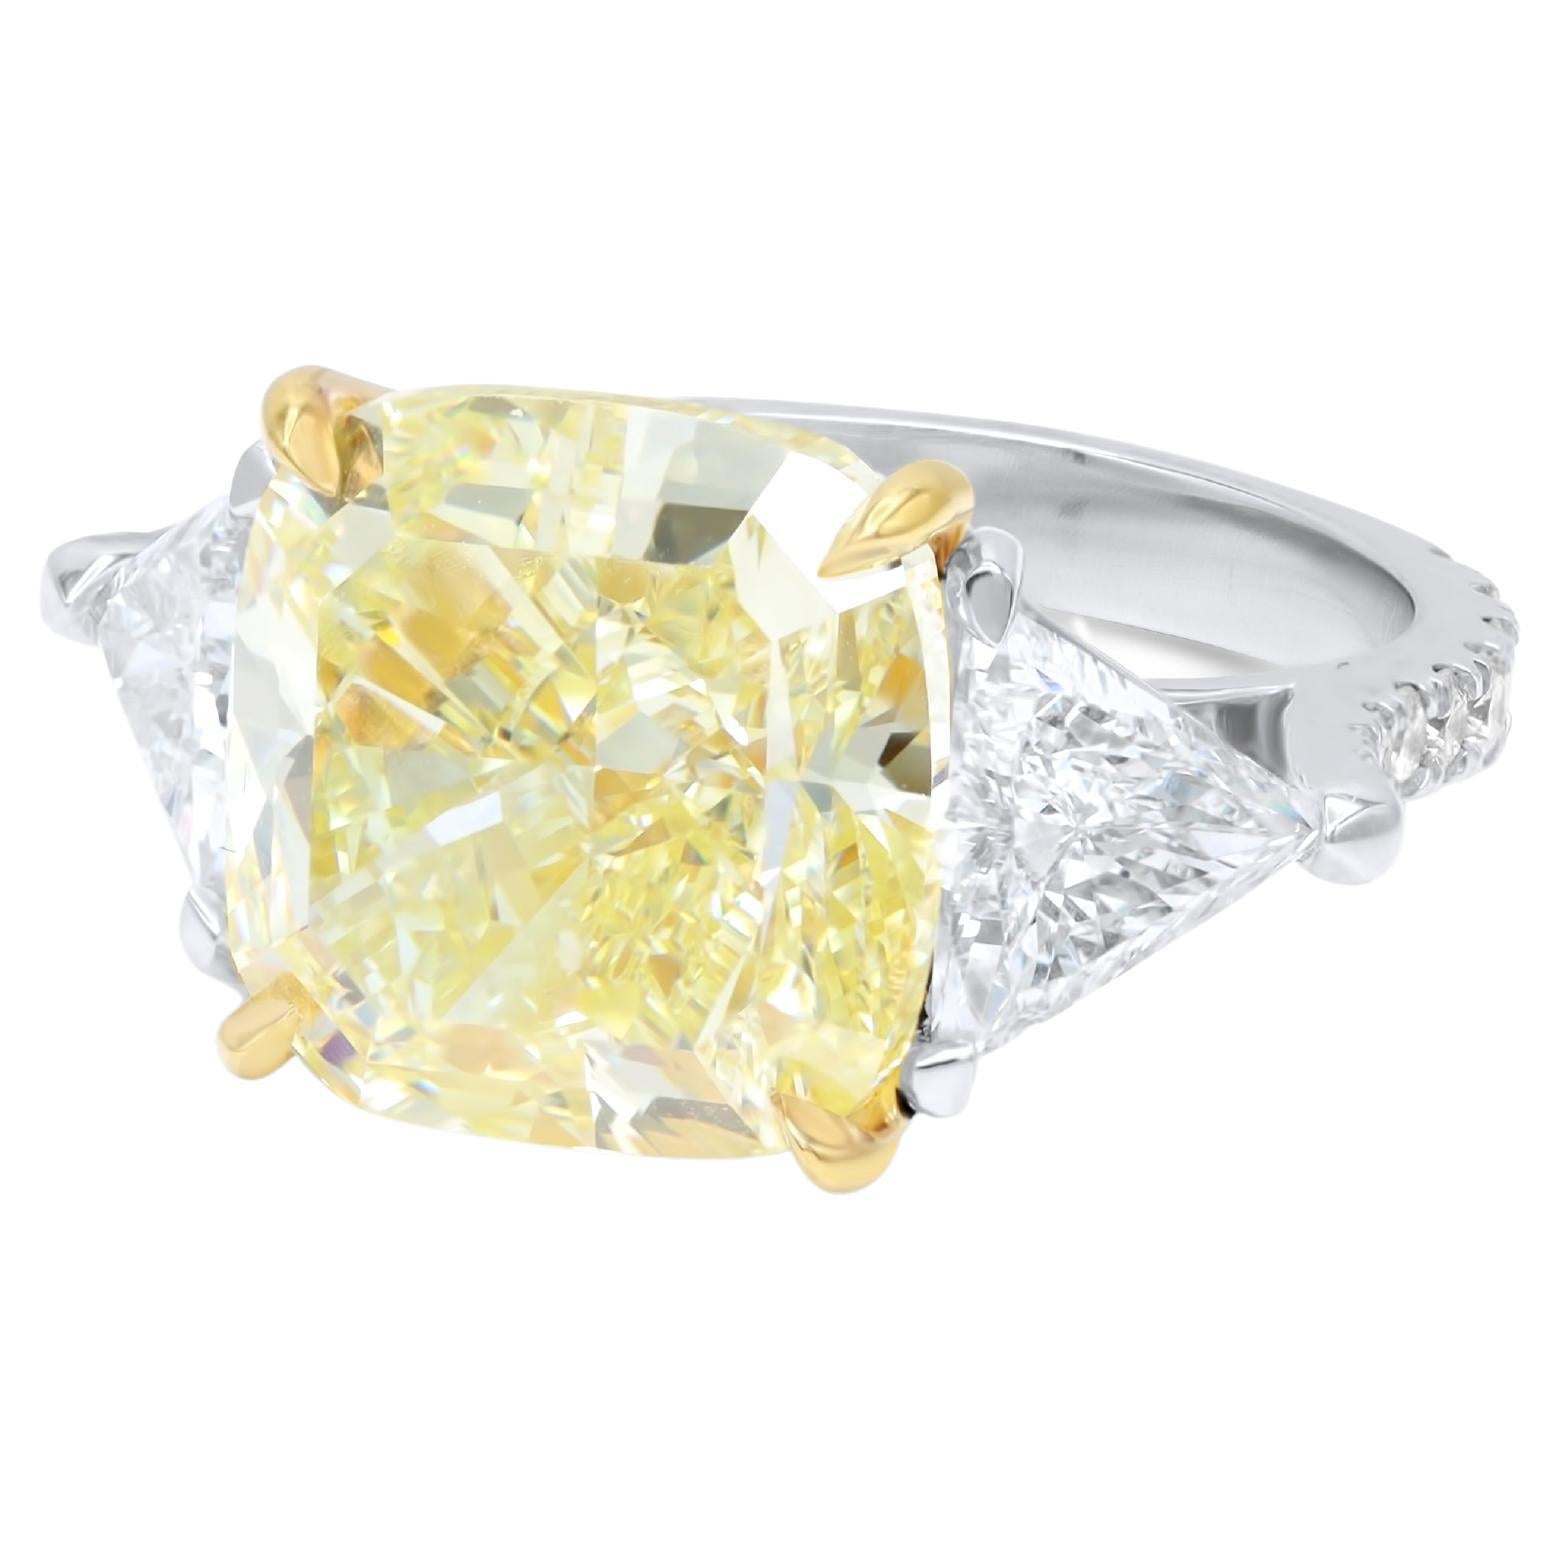 Diana M. Platinum (FLY VS1) 10.01 ct cushion cut yellow diamond For Sale